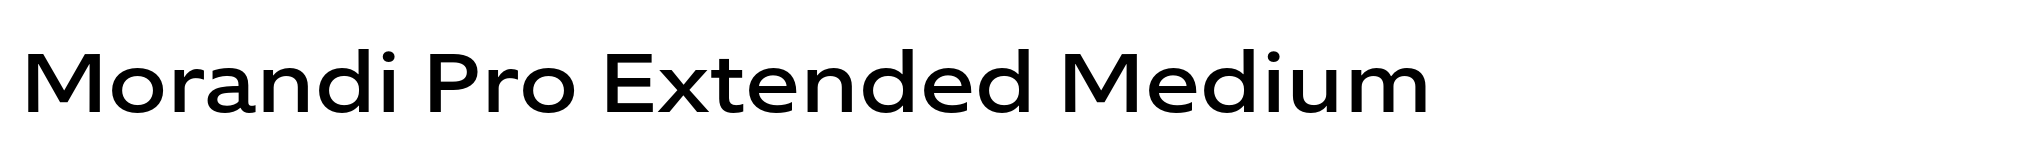 Morandi Pro Extended Medium image